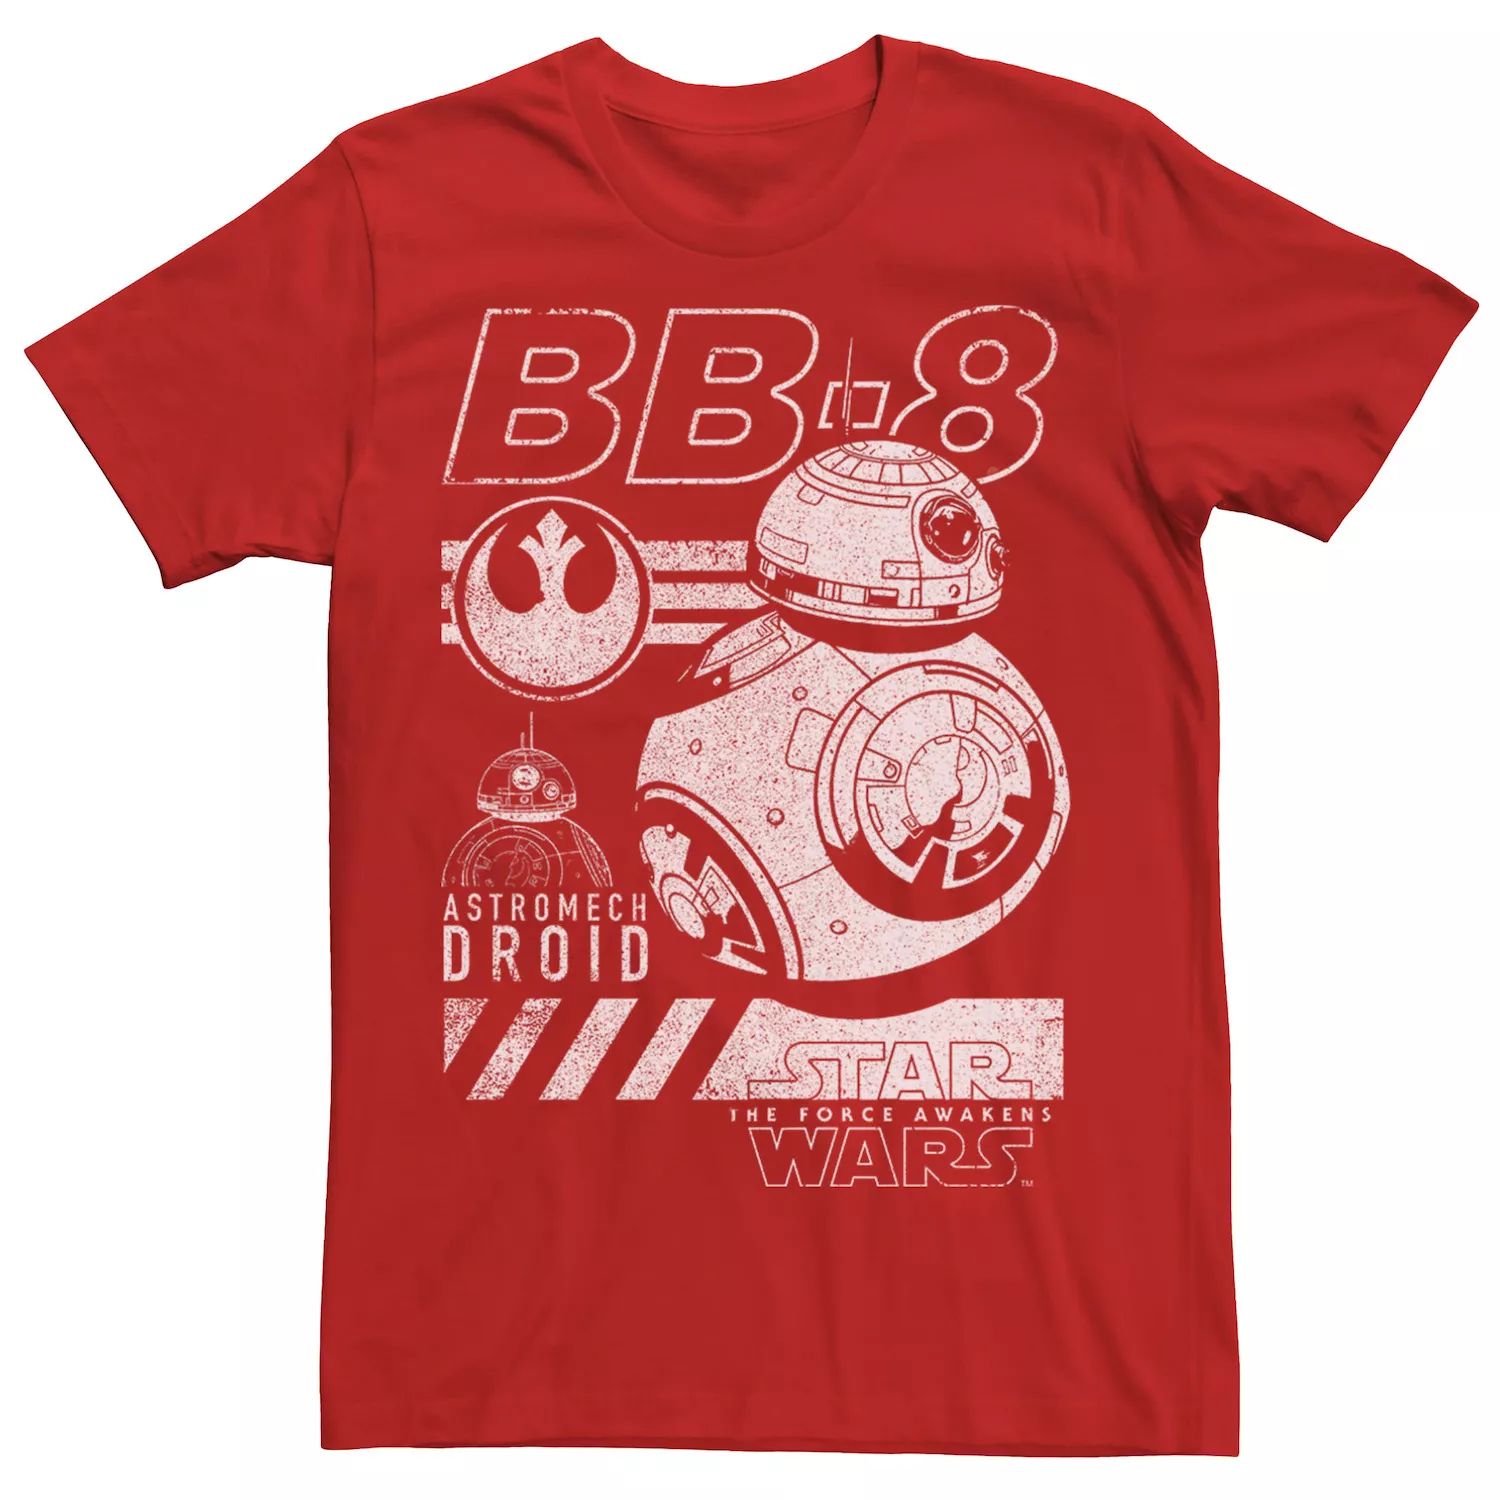 Мужская футболка с рисунком The Force Awakens BB-8 Astromech Droid Star Wars star wars cufflinks force awakens bb8 bb 8 r2d2 droid robot action figure stormtrooper shirt men shirt birthday toys wholesale